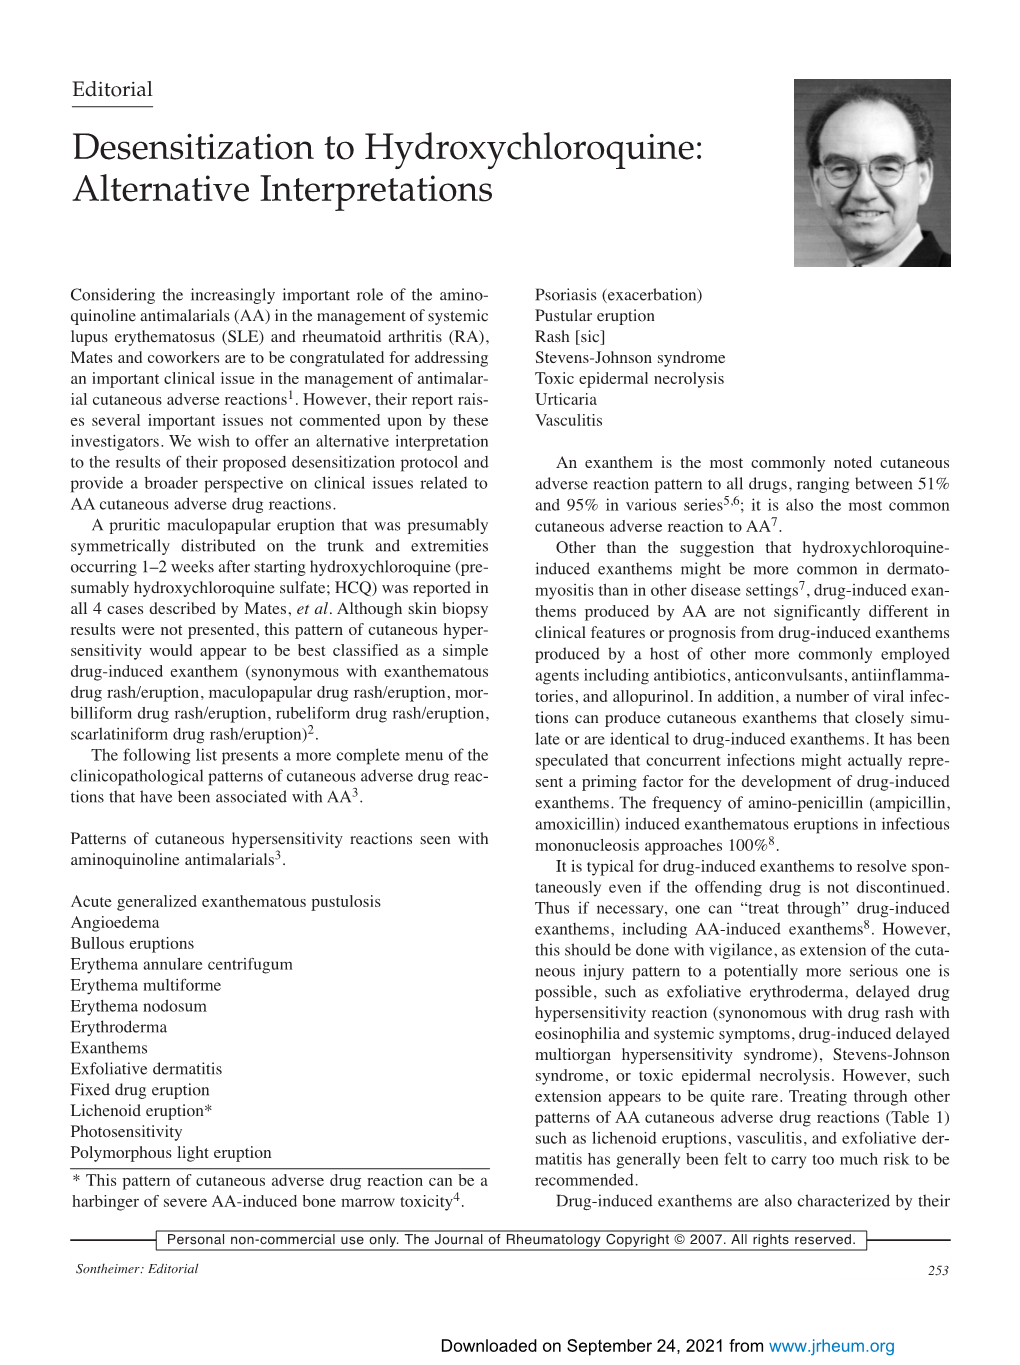 Desensitization to Hydroxychloroquine: Alternative Interpretations